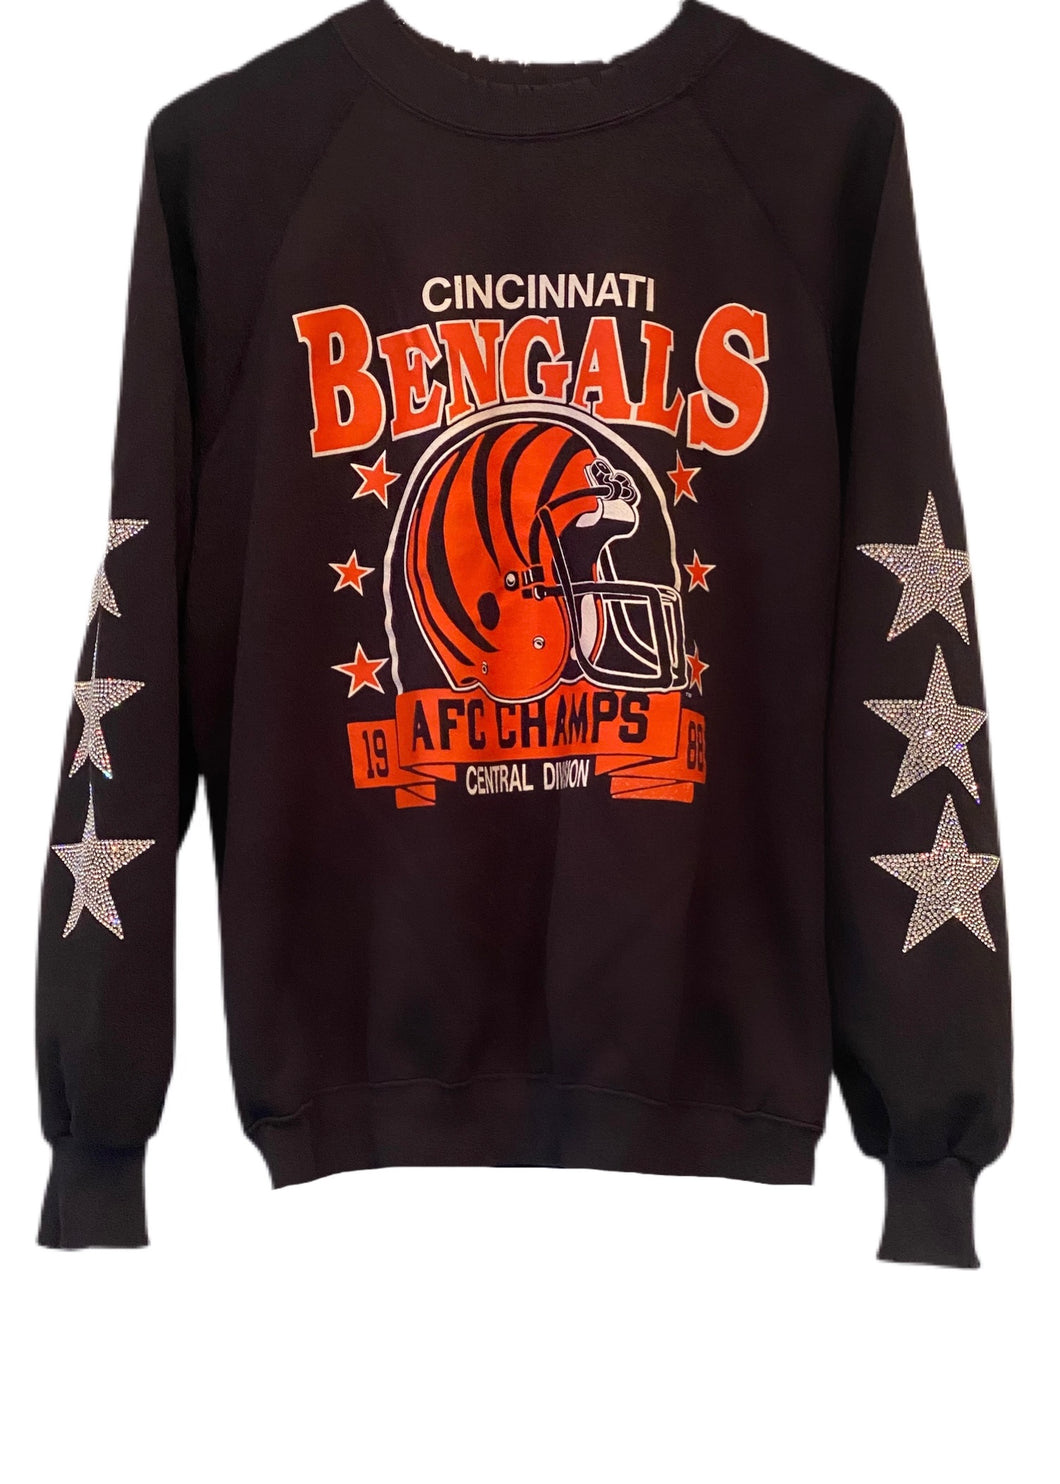 Cincinnati Bengals, NFL One of a KIND Vintage Sweatshirt with Three Crystal Star Design